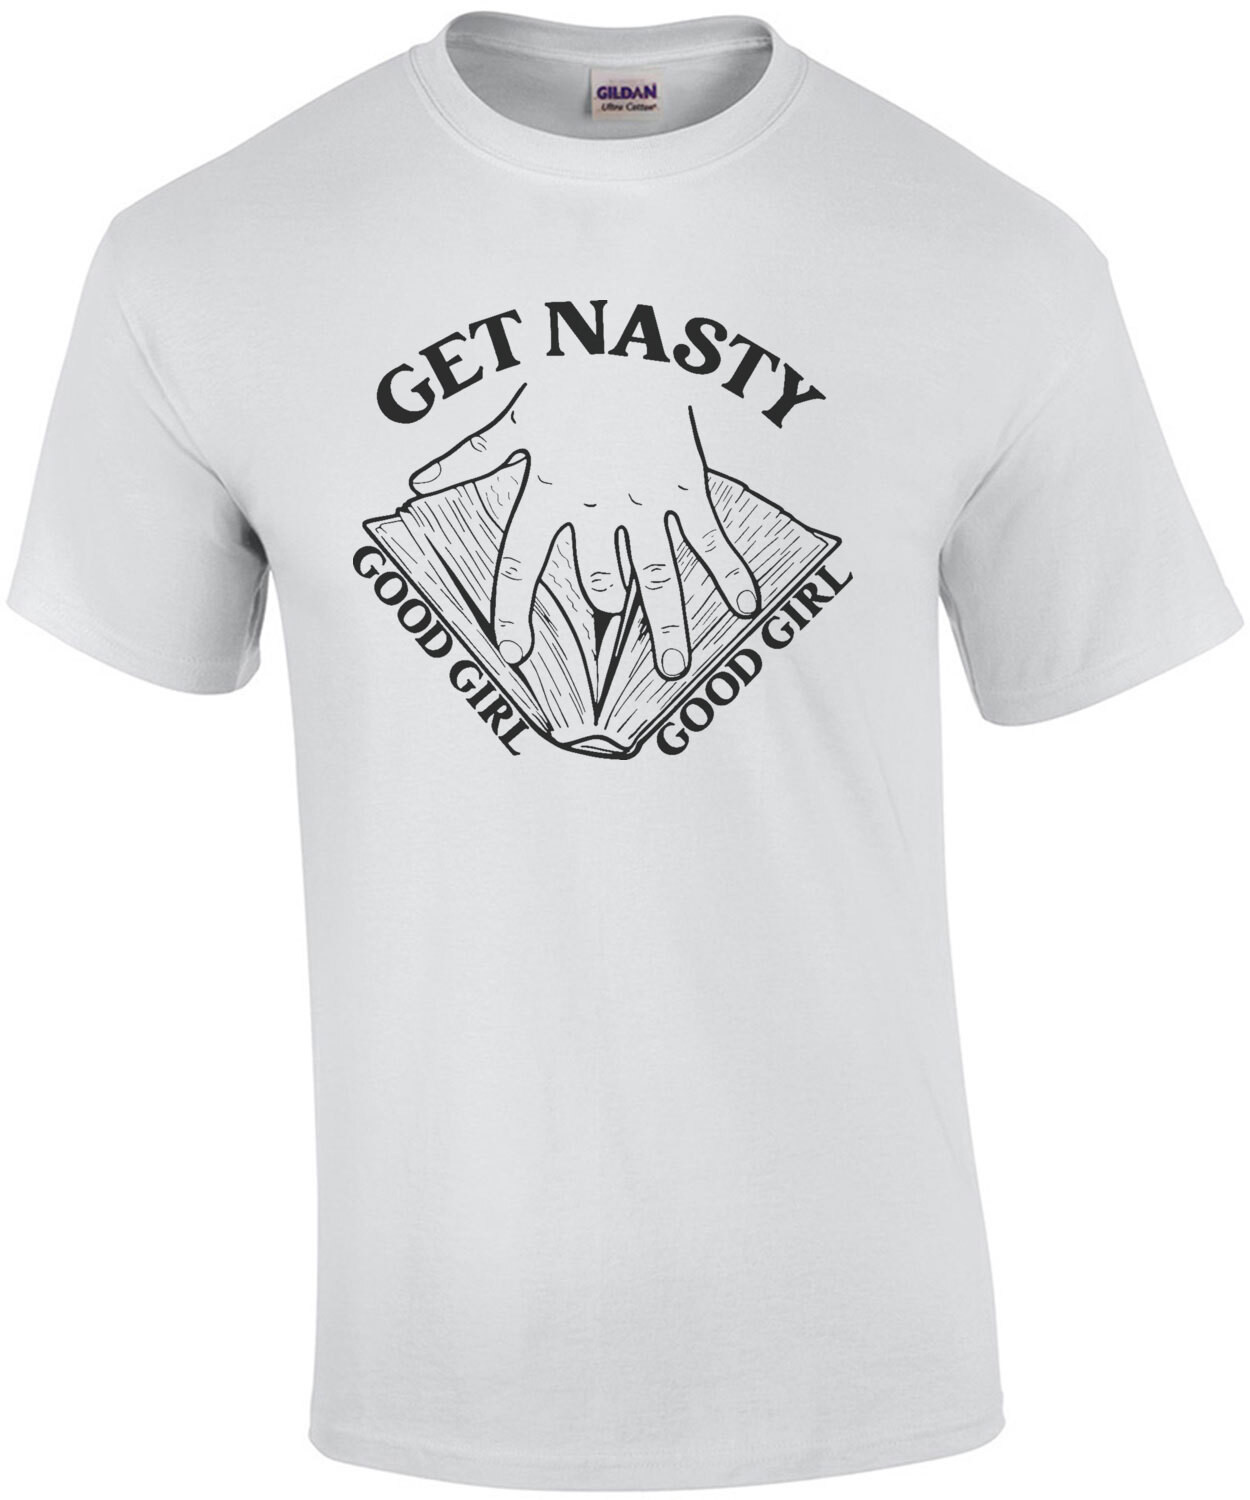 Get Nasty Good Girl Book Reader T-Shirt